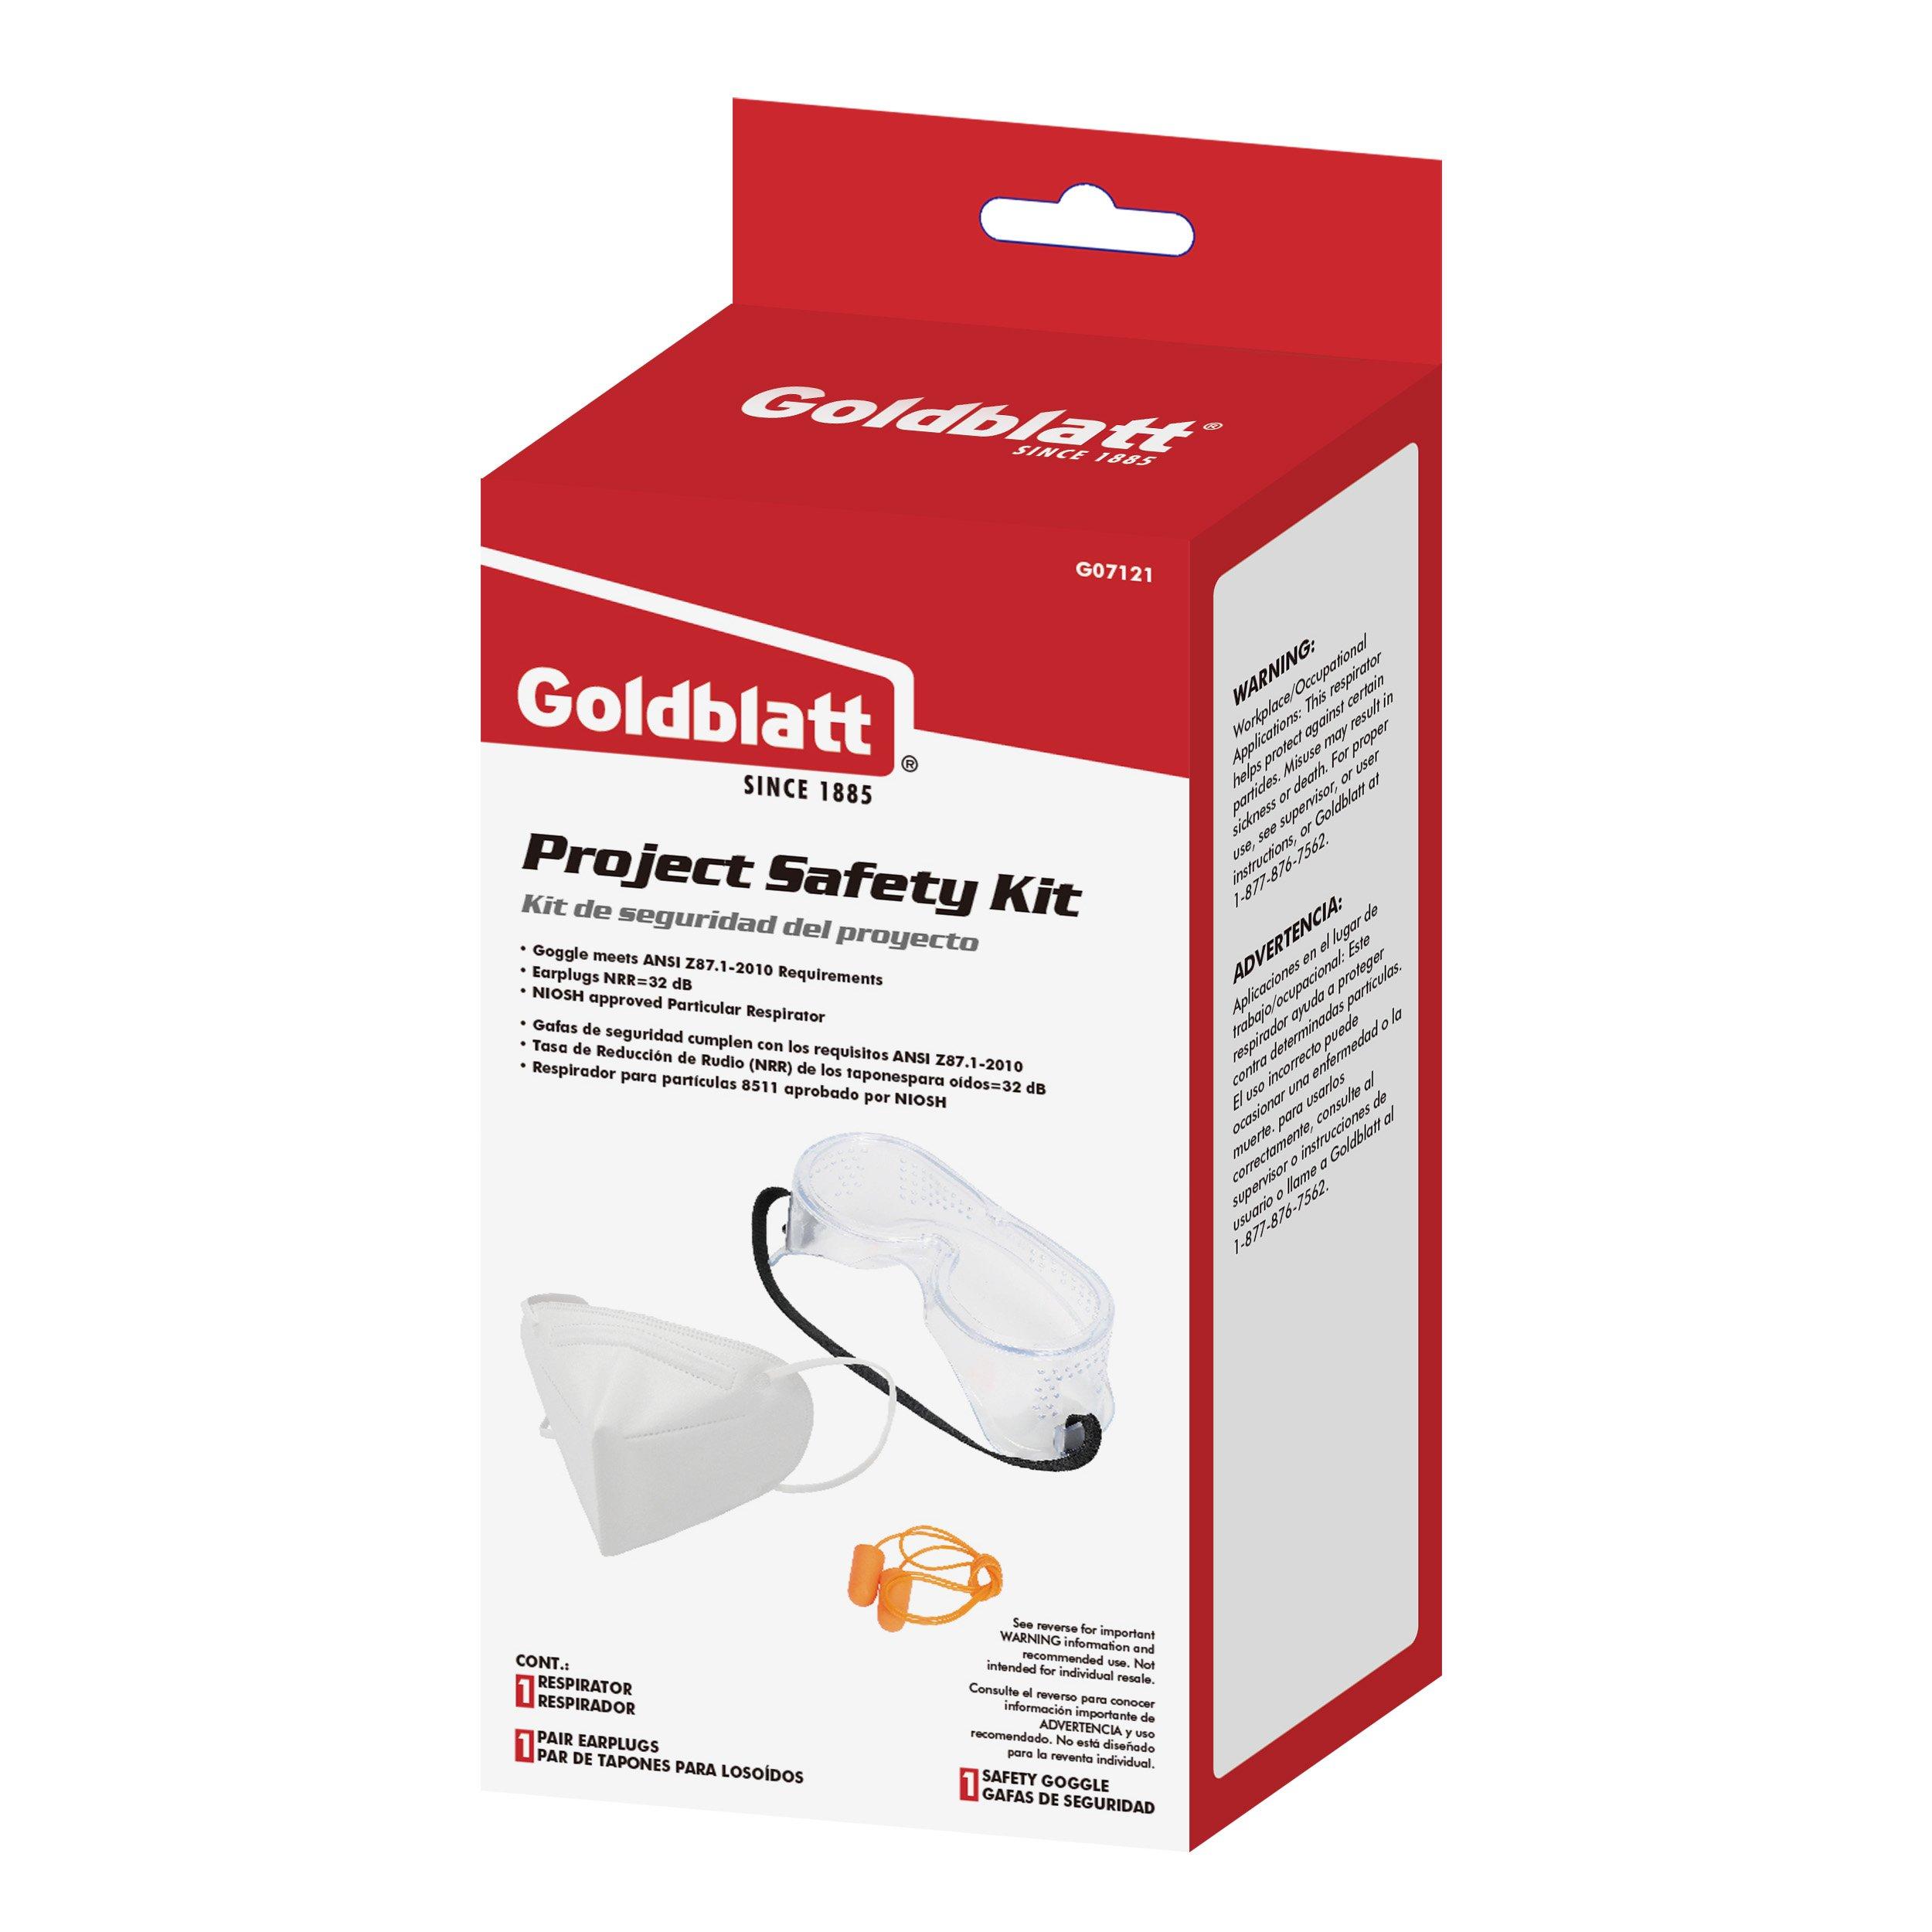 Goldblatt Project Safety Kit